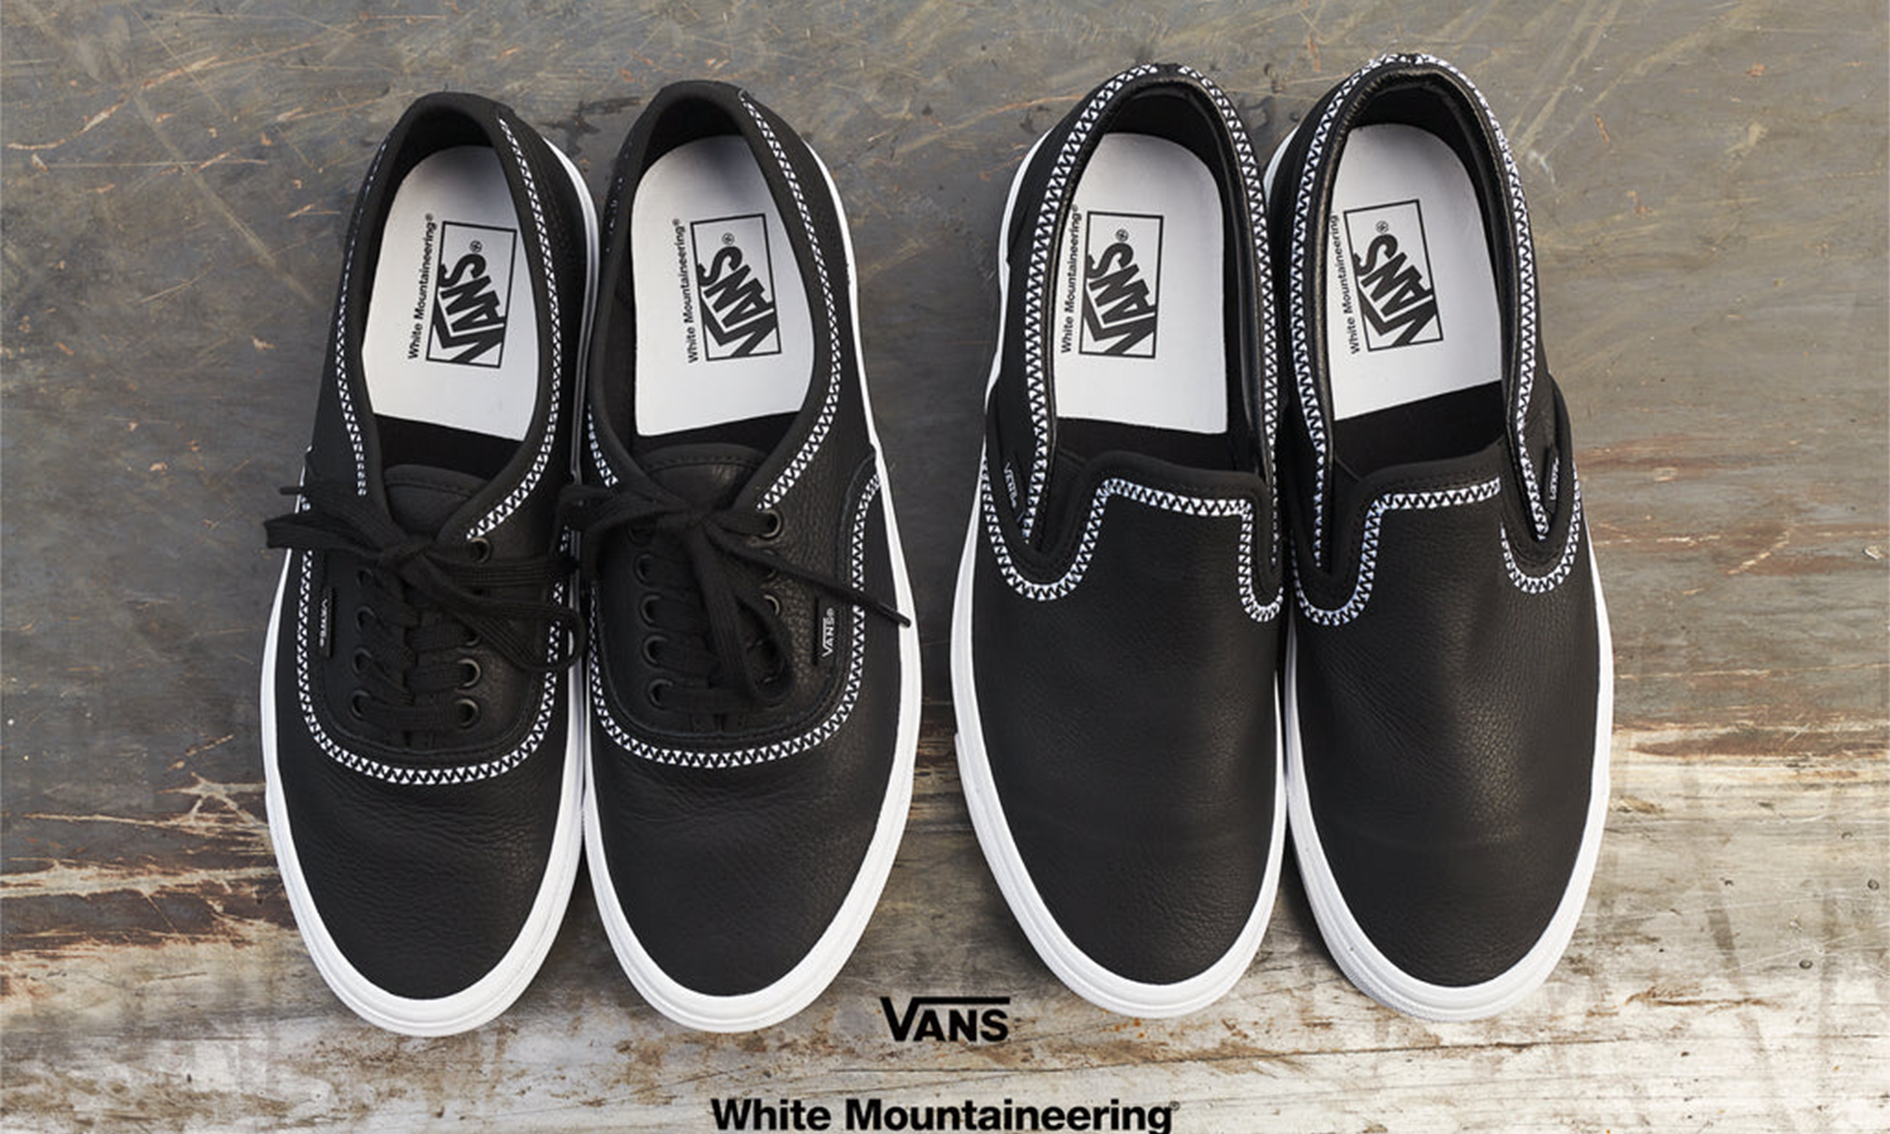 WHITE MOUNTAINEERING x Vans 合作系列鞋款释出